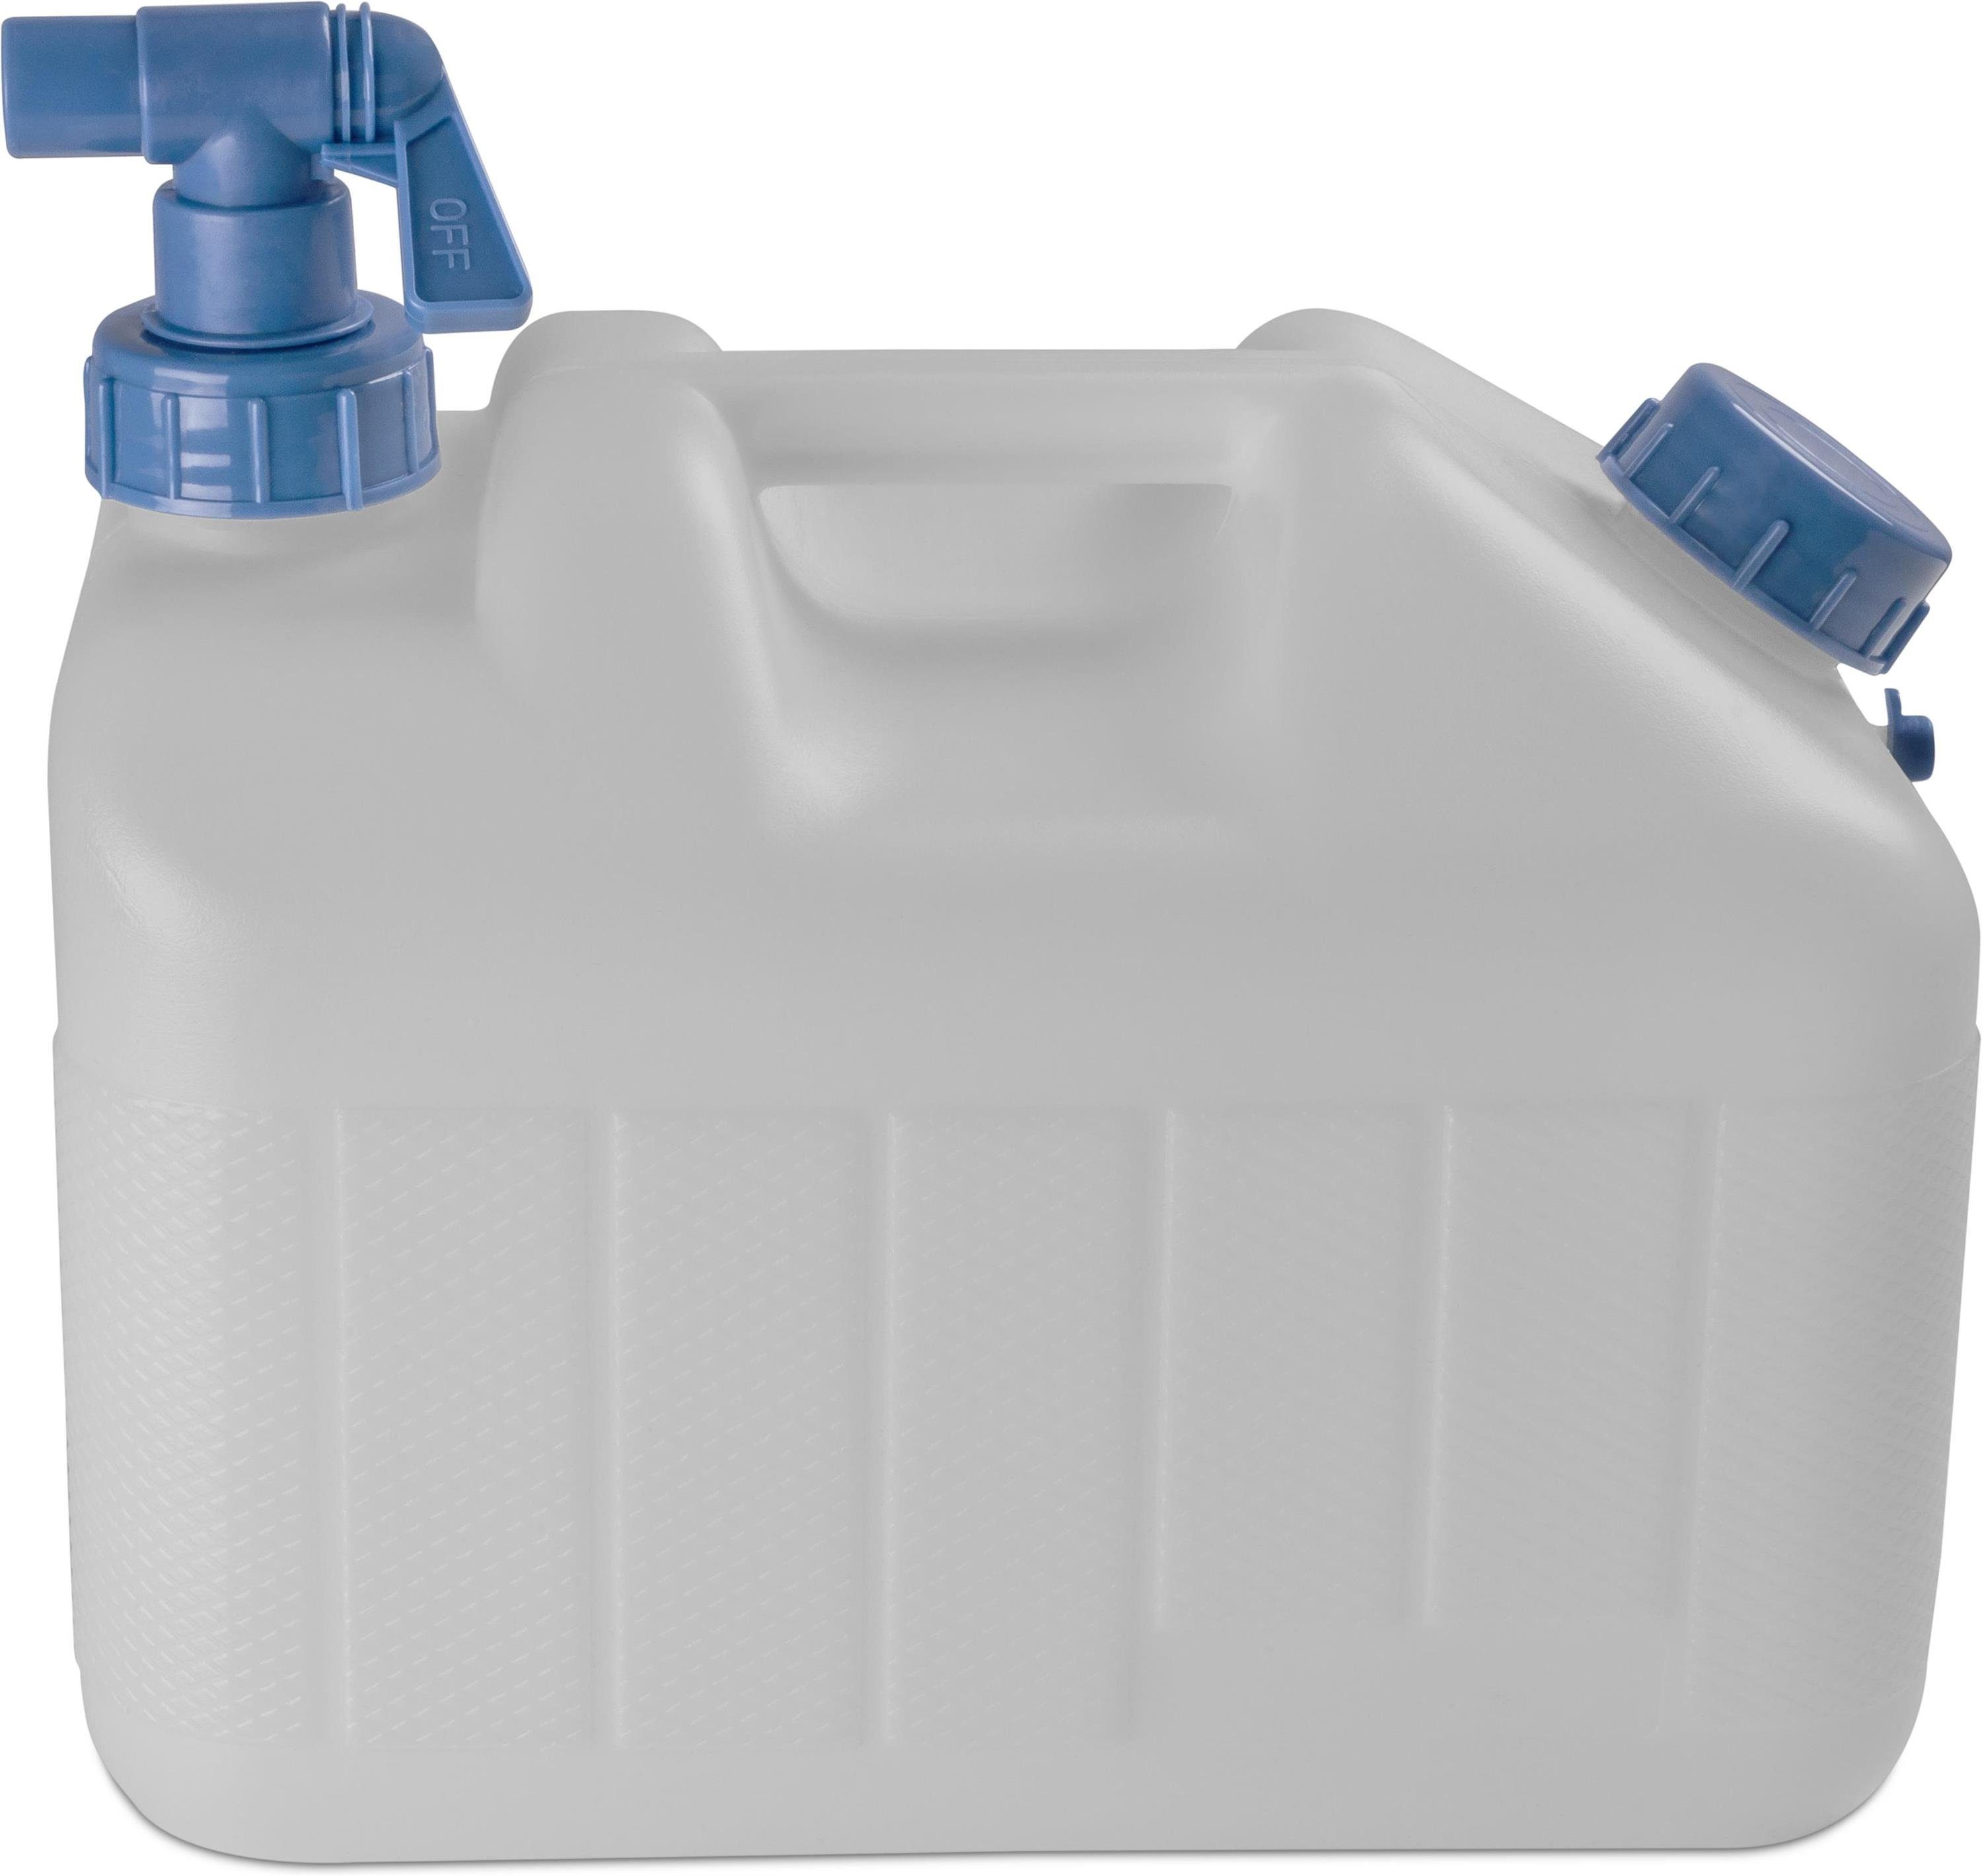 normani Kanister Dispenser mit 10 St), HD-PE Camping-Kanister Hahn (1 Wasserkanister Trinkwasserbehälter - Lebensmittelecht Wassertank Liter